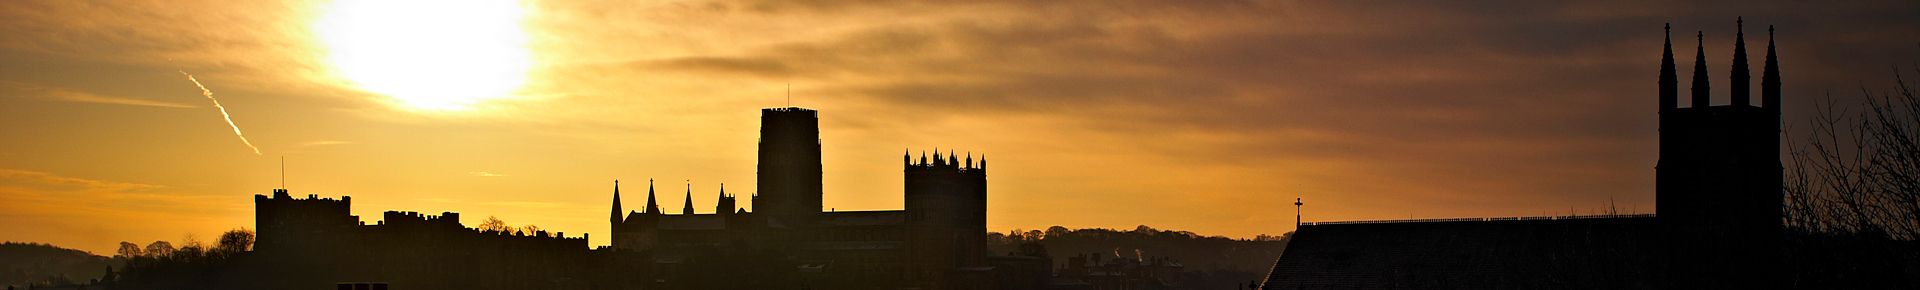 Durham City Skyline at sunset